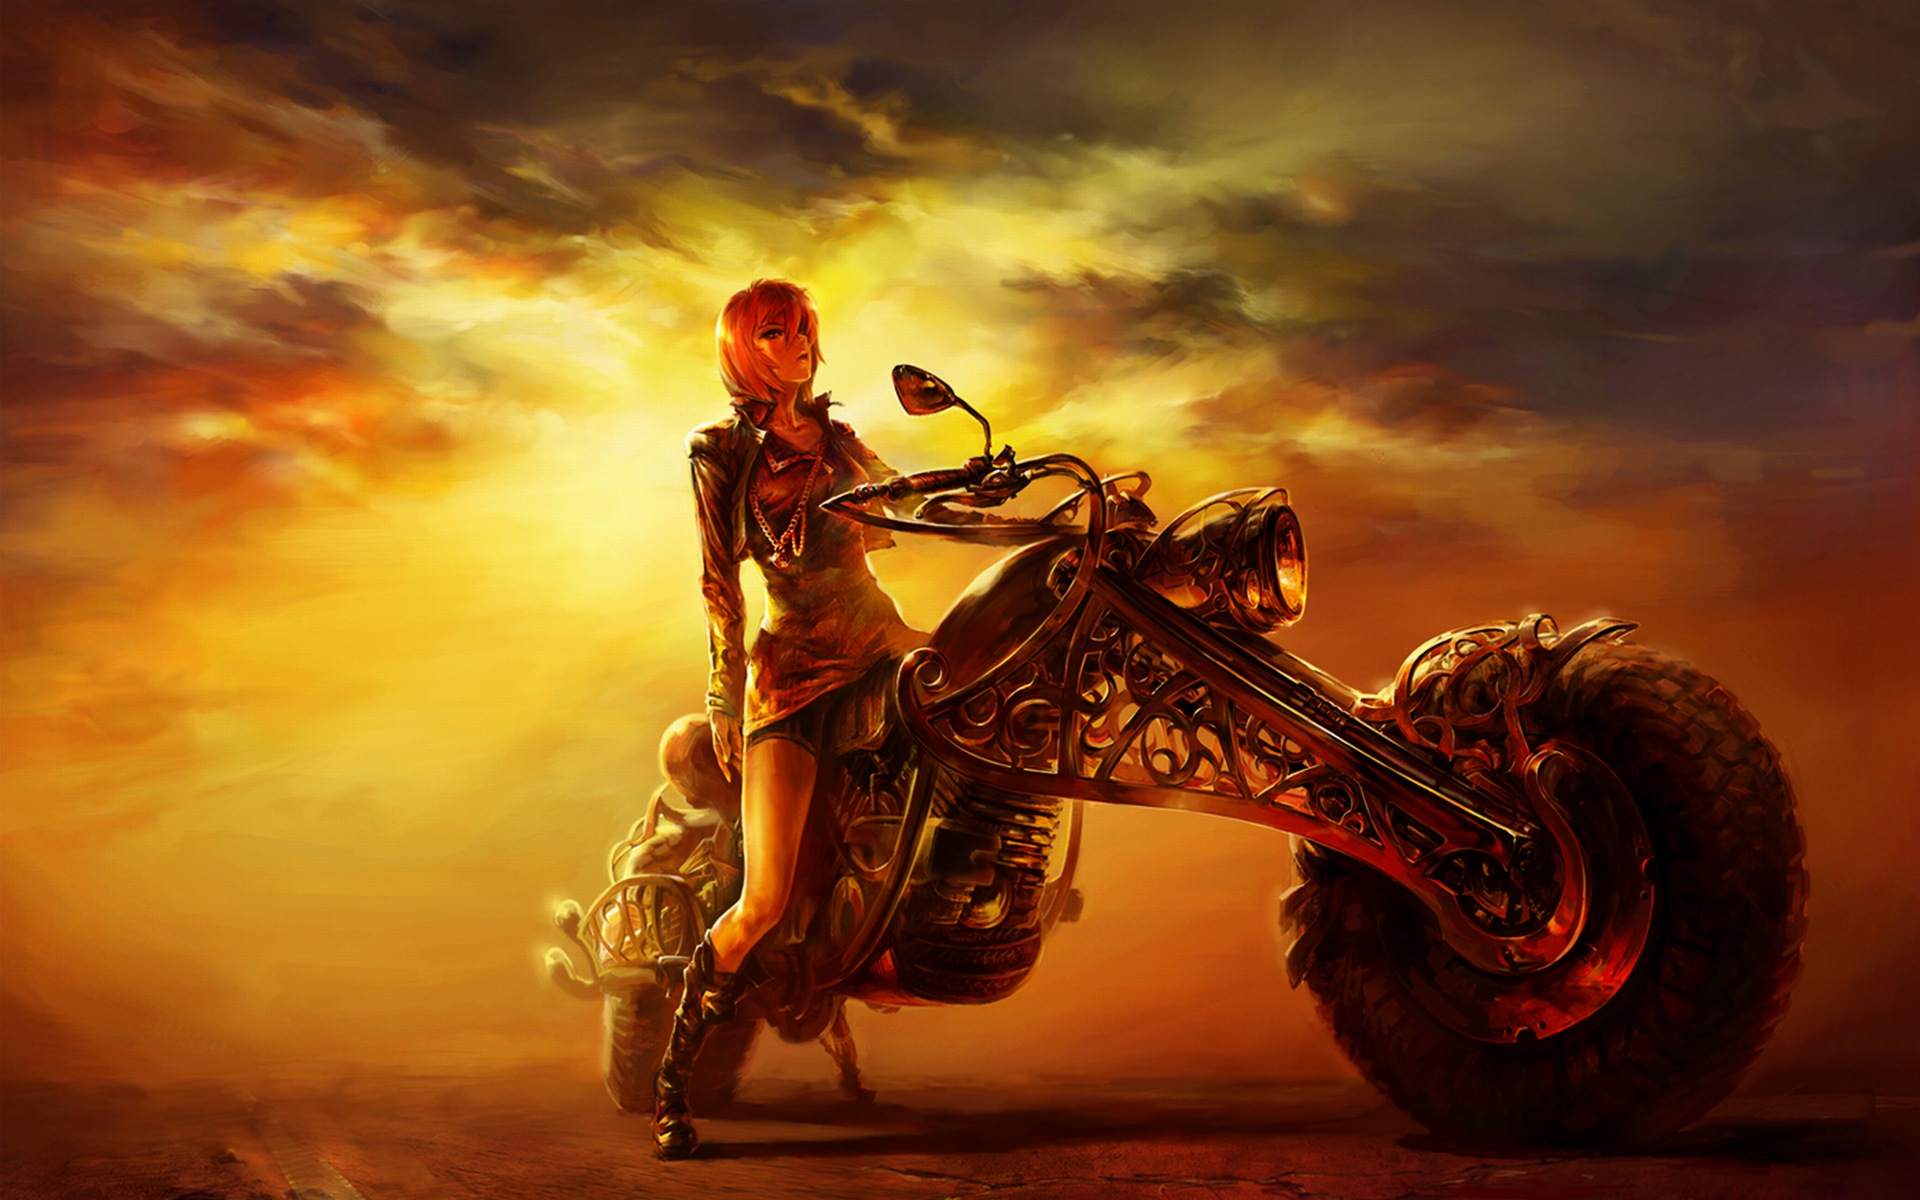 Cg女の子壁紙 オートバイ 車両 砂漠レース モーターサイクリング 空 Wallpaperuse